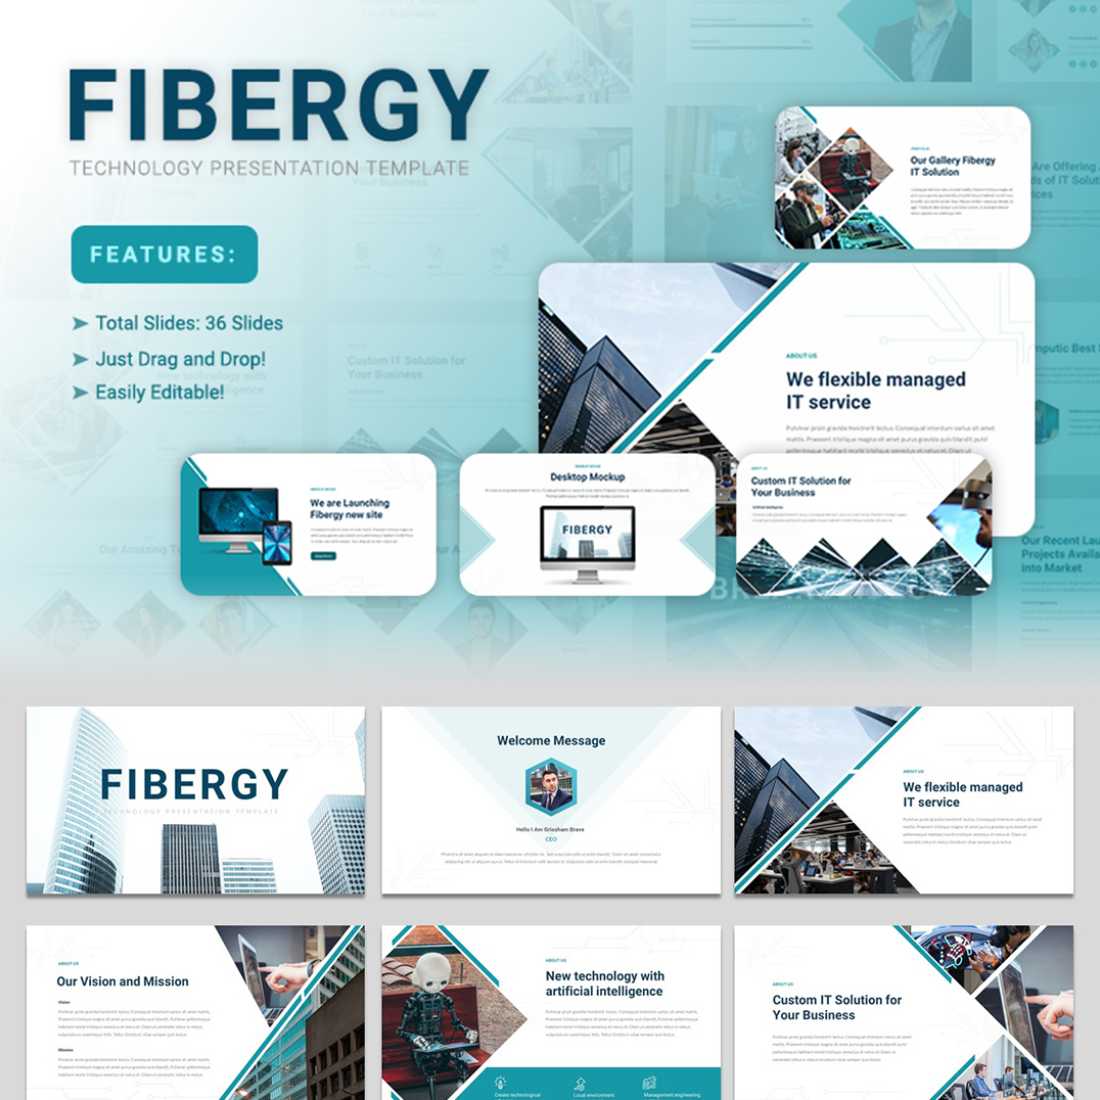 Fibergy - Technology Presentation Google Slides Template preview image.